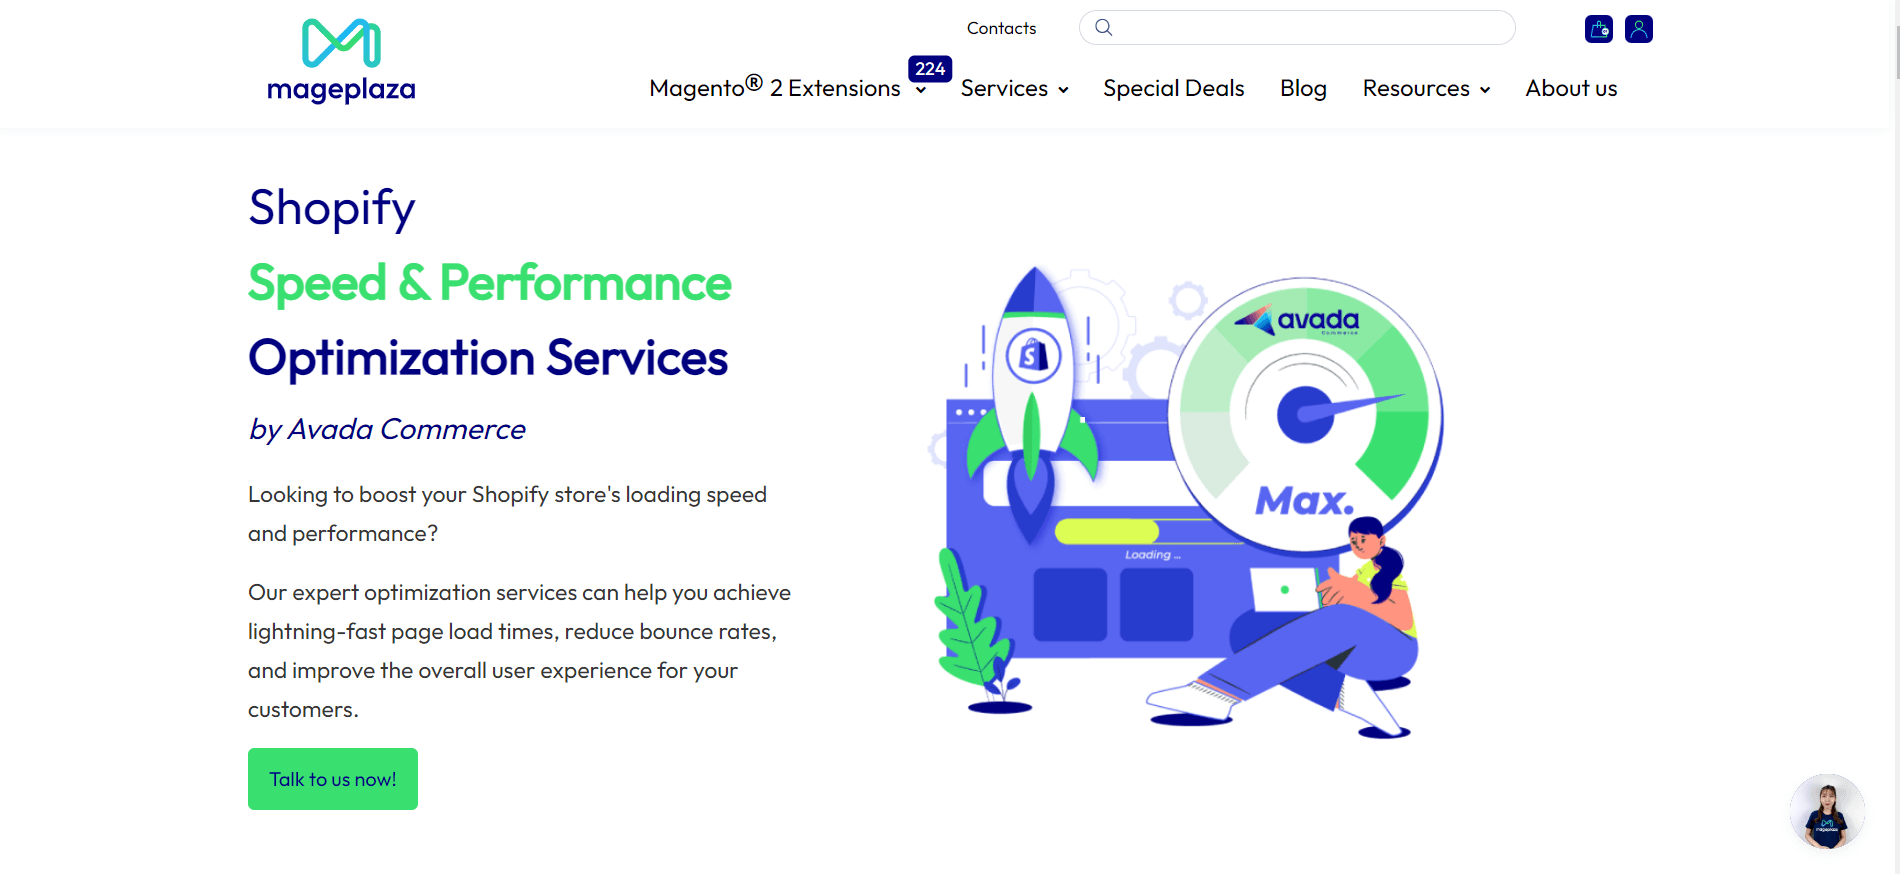 Mageplaza’s Shopify Speed & Performance Optimization Service